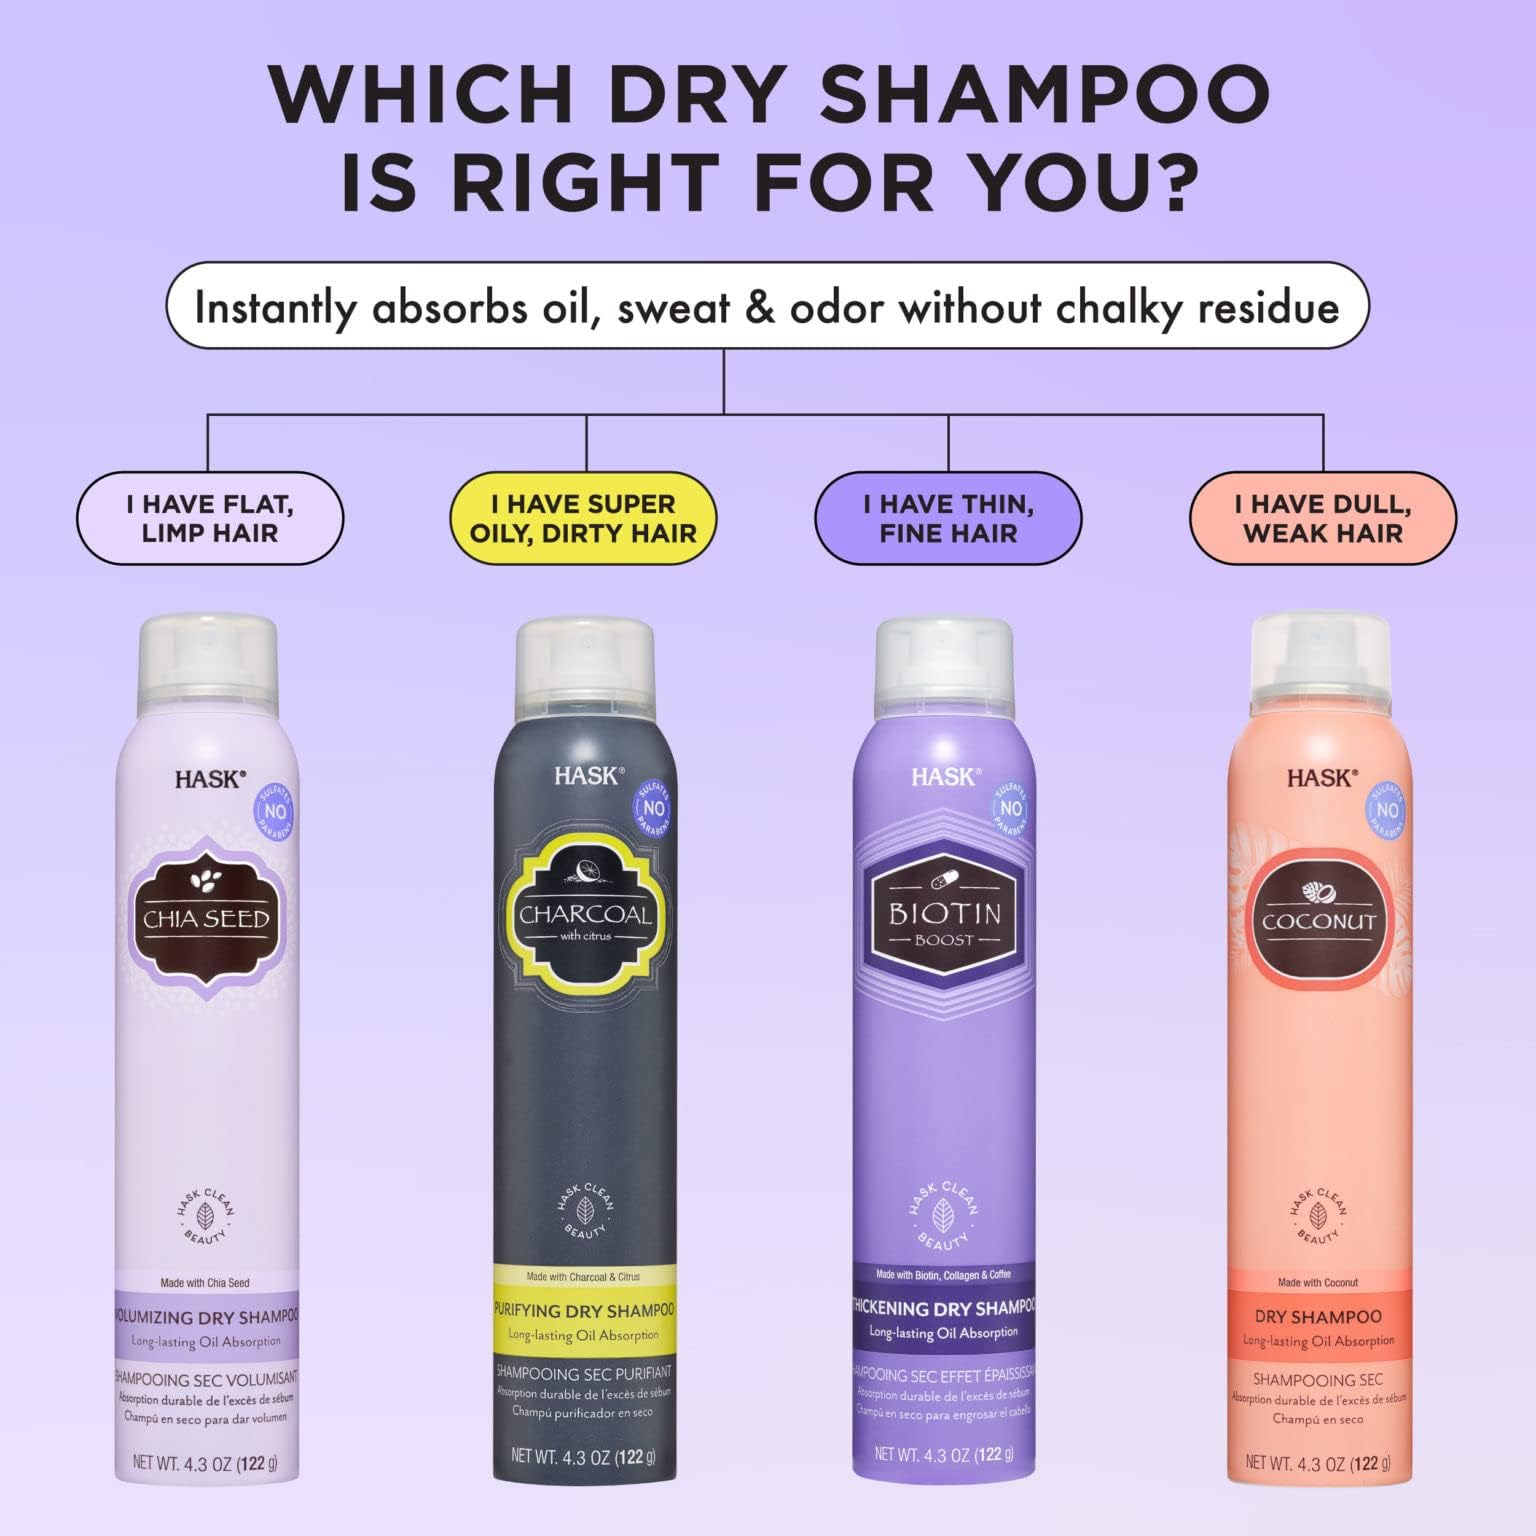 HASK Dry Shampoo Sampler Set: 1 each Chia Seed Dry Shampoo and Charcoal Clarifying Dry Shampoo 4.3oz cans